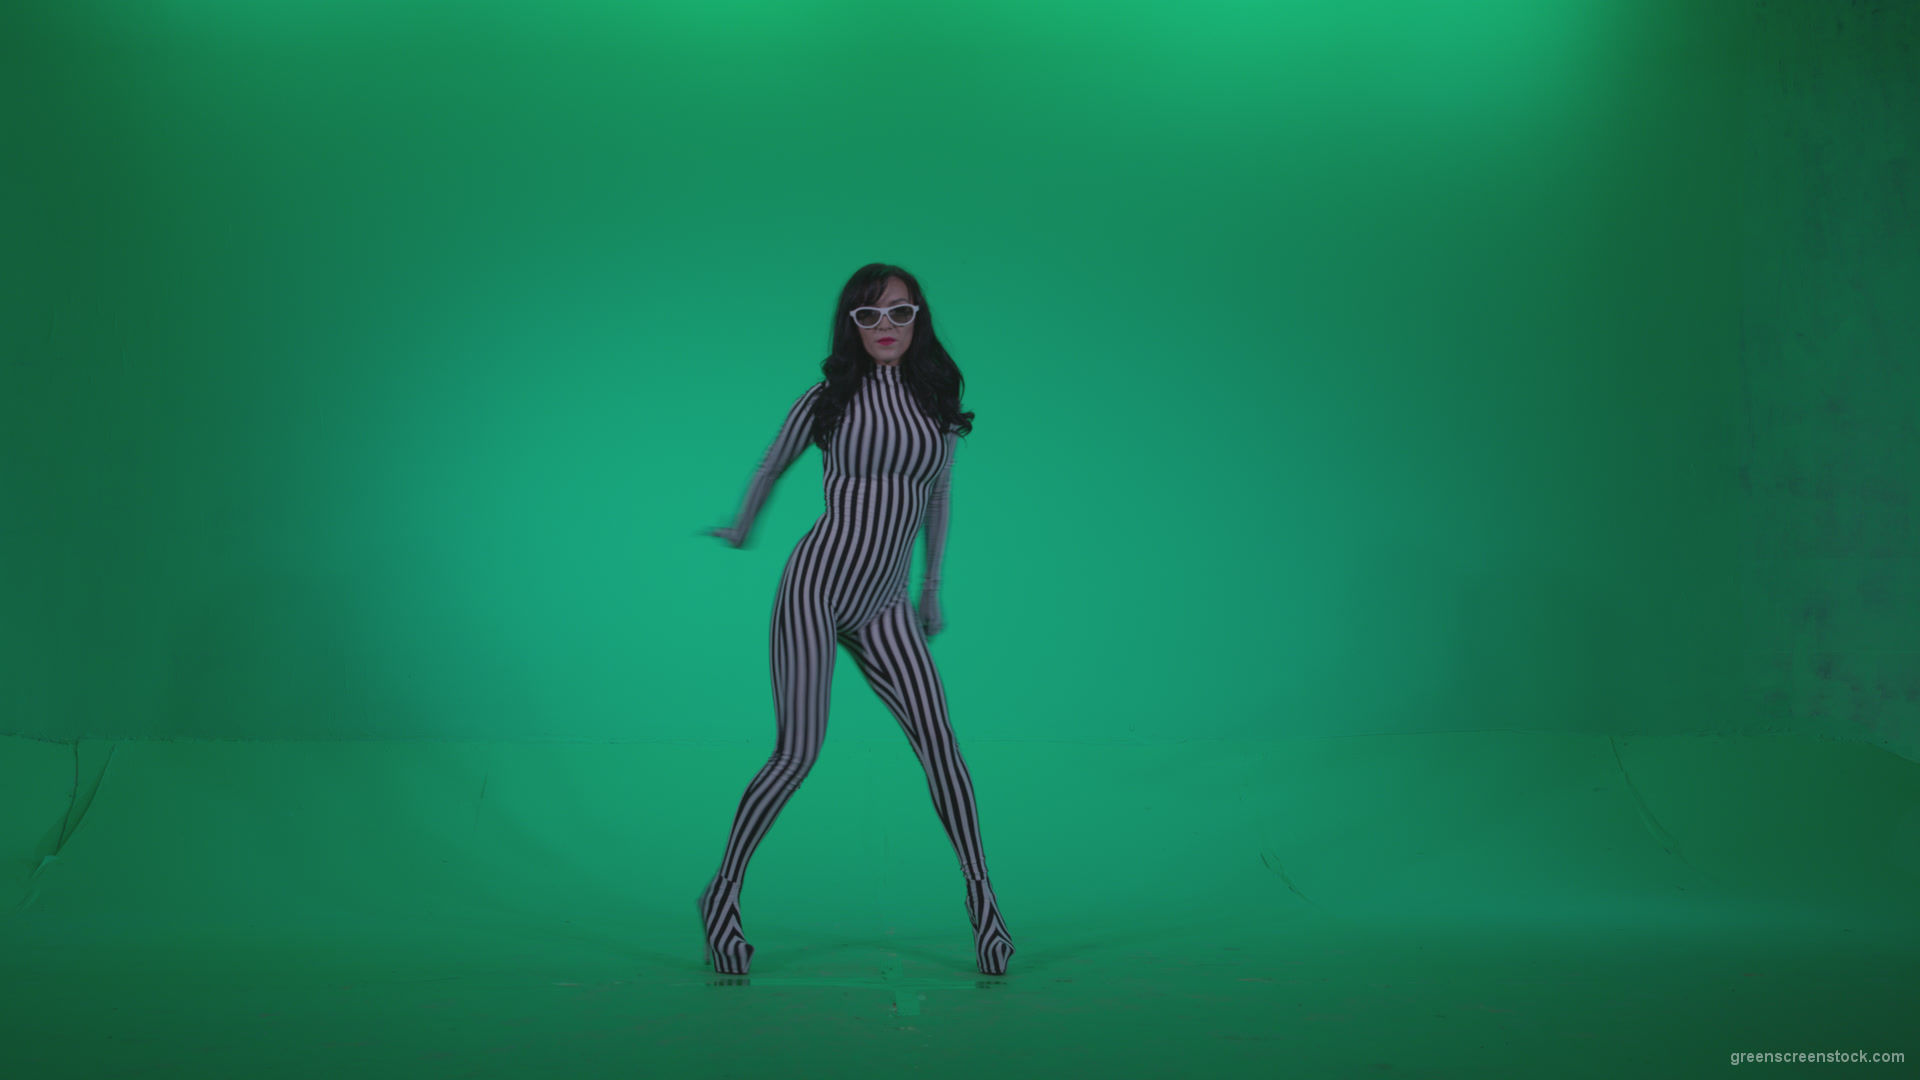 Go-go-Dancer-White-Stripes-s7-Green-Screen-Video-Footage_004 Green Screen Stock